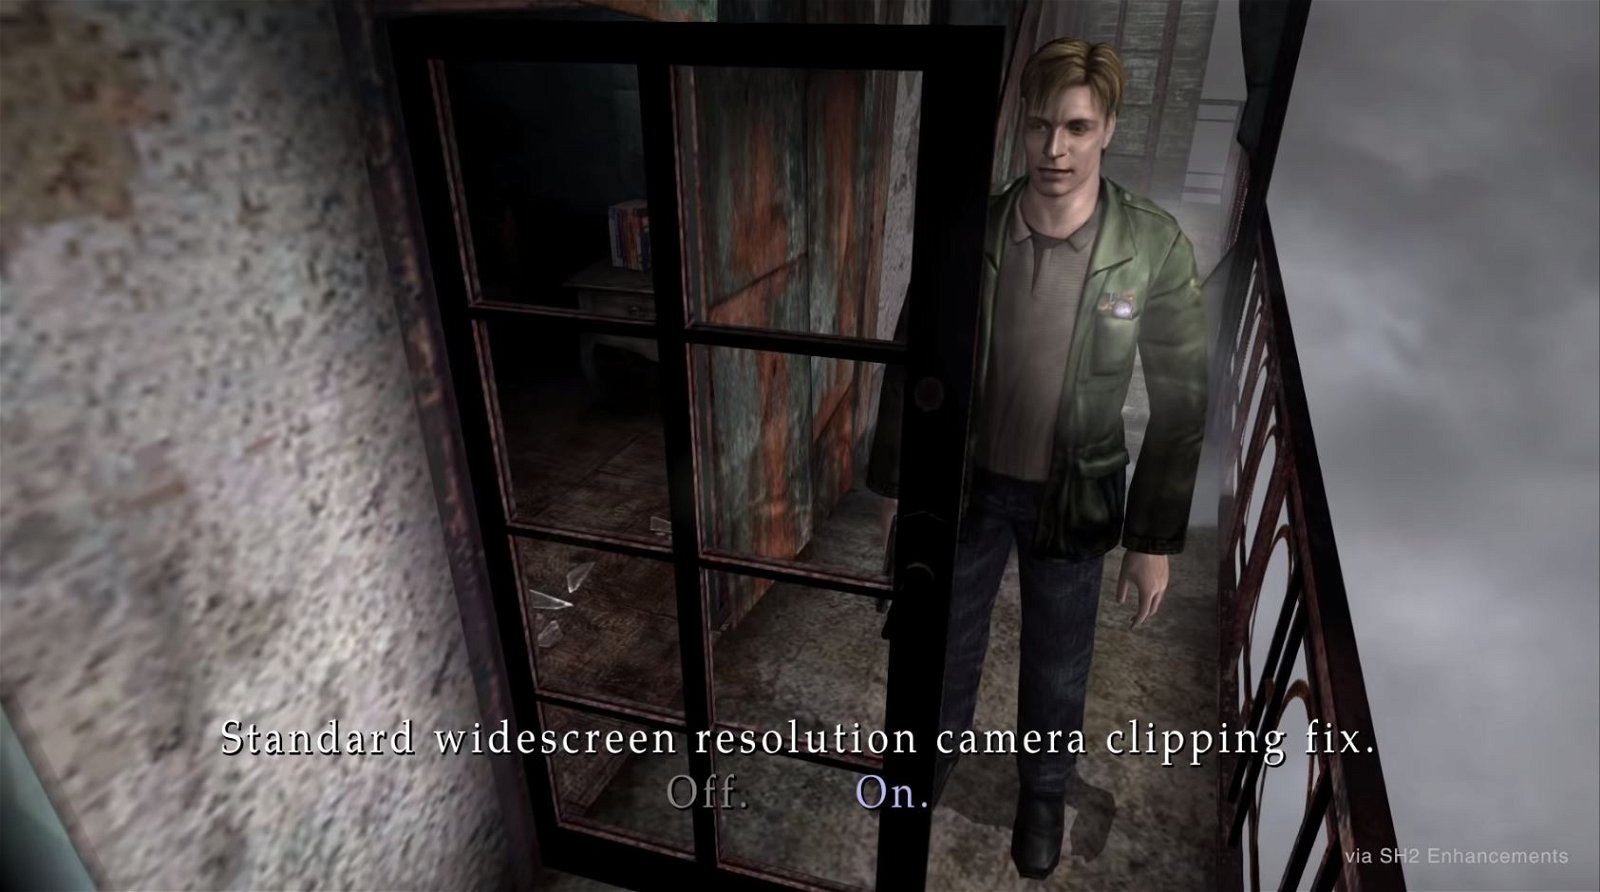 Silent Hill 2 luce mejor que nunca en PC gracias a un mod, ¡no te pierdas el tráiler!